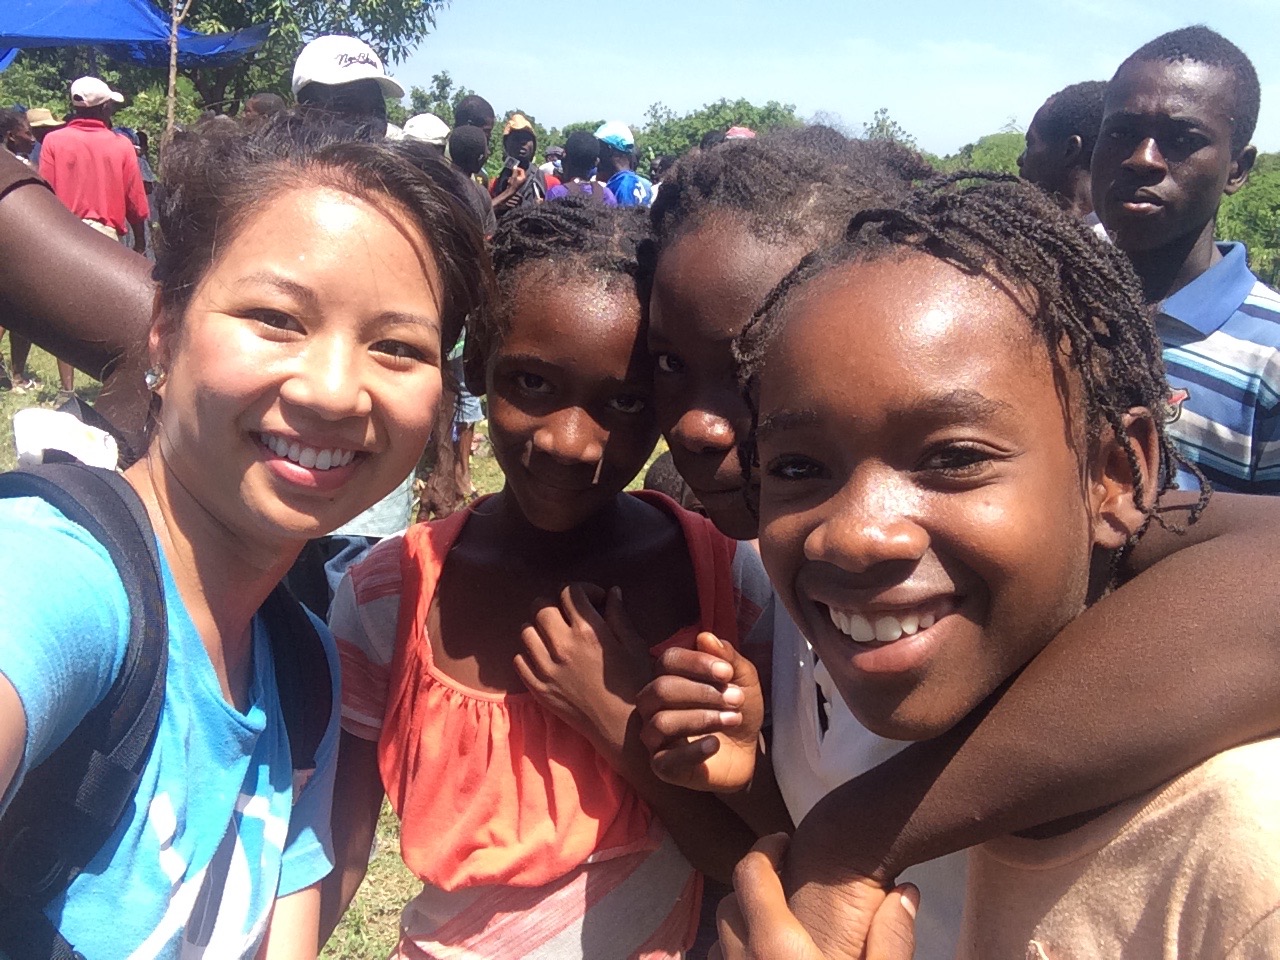 Linnette poses with children in Haiti.